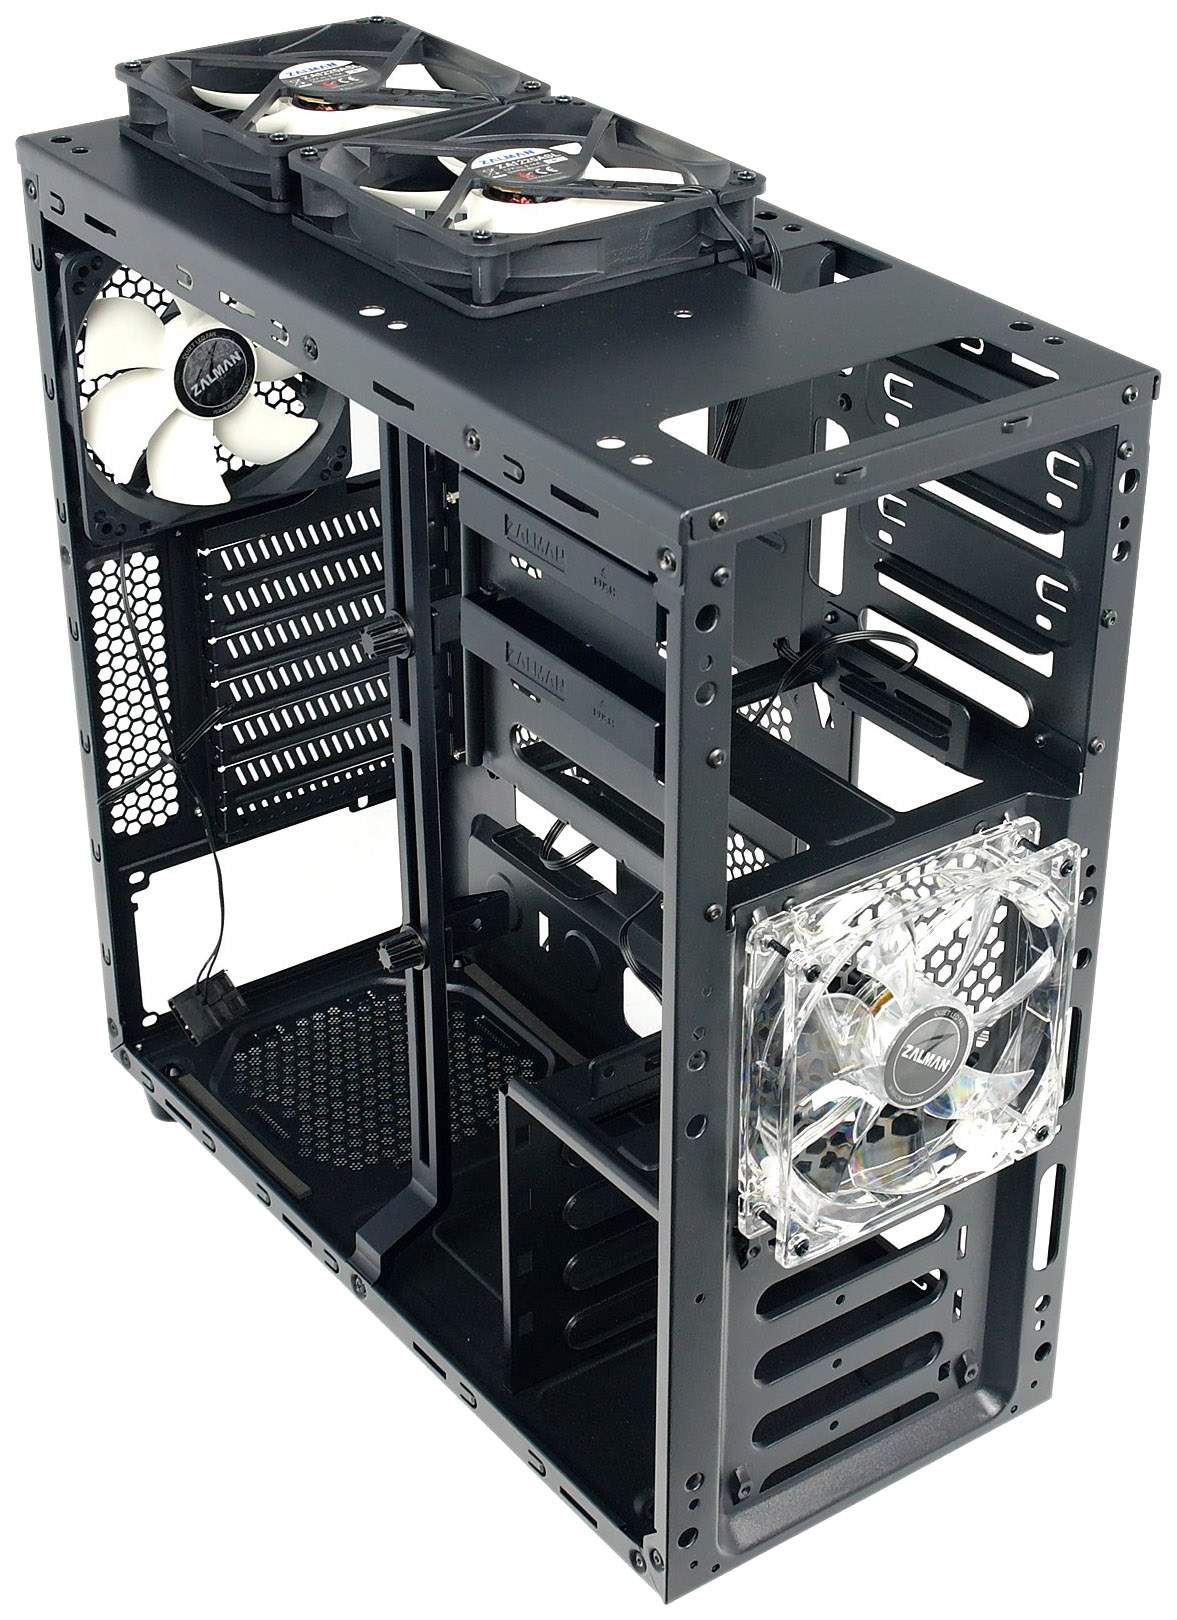 Корпус компьютерный Zalman Z3 Plus Black